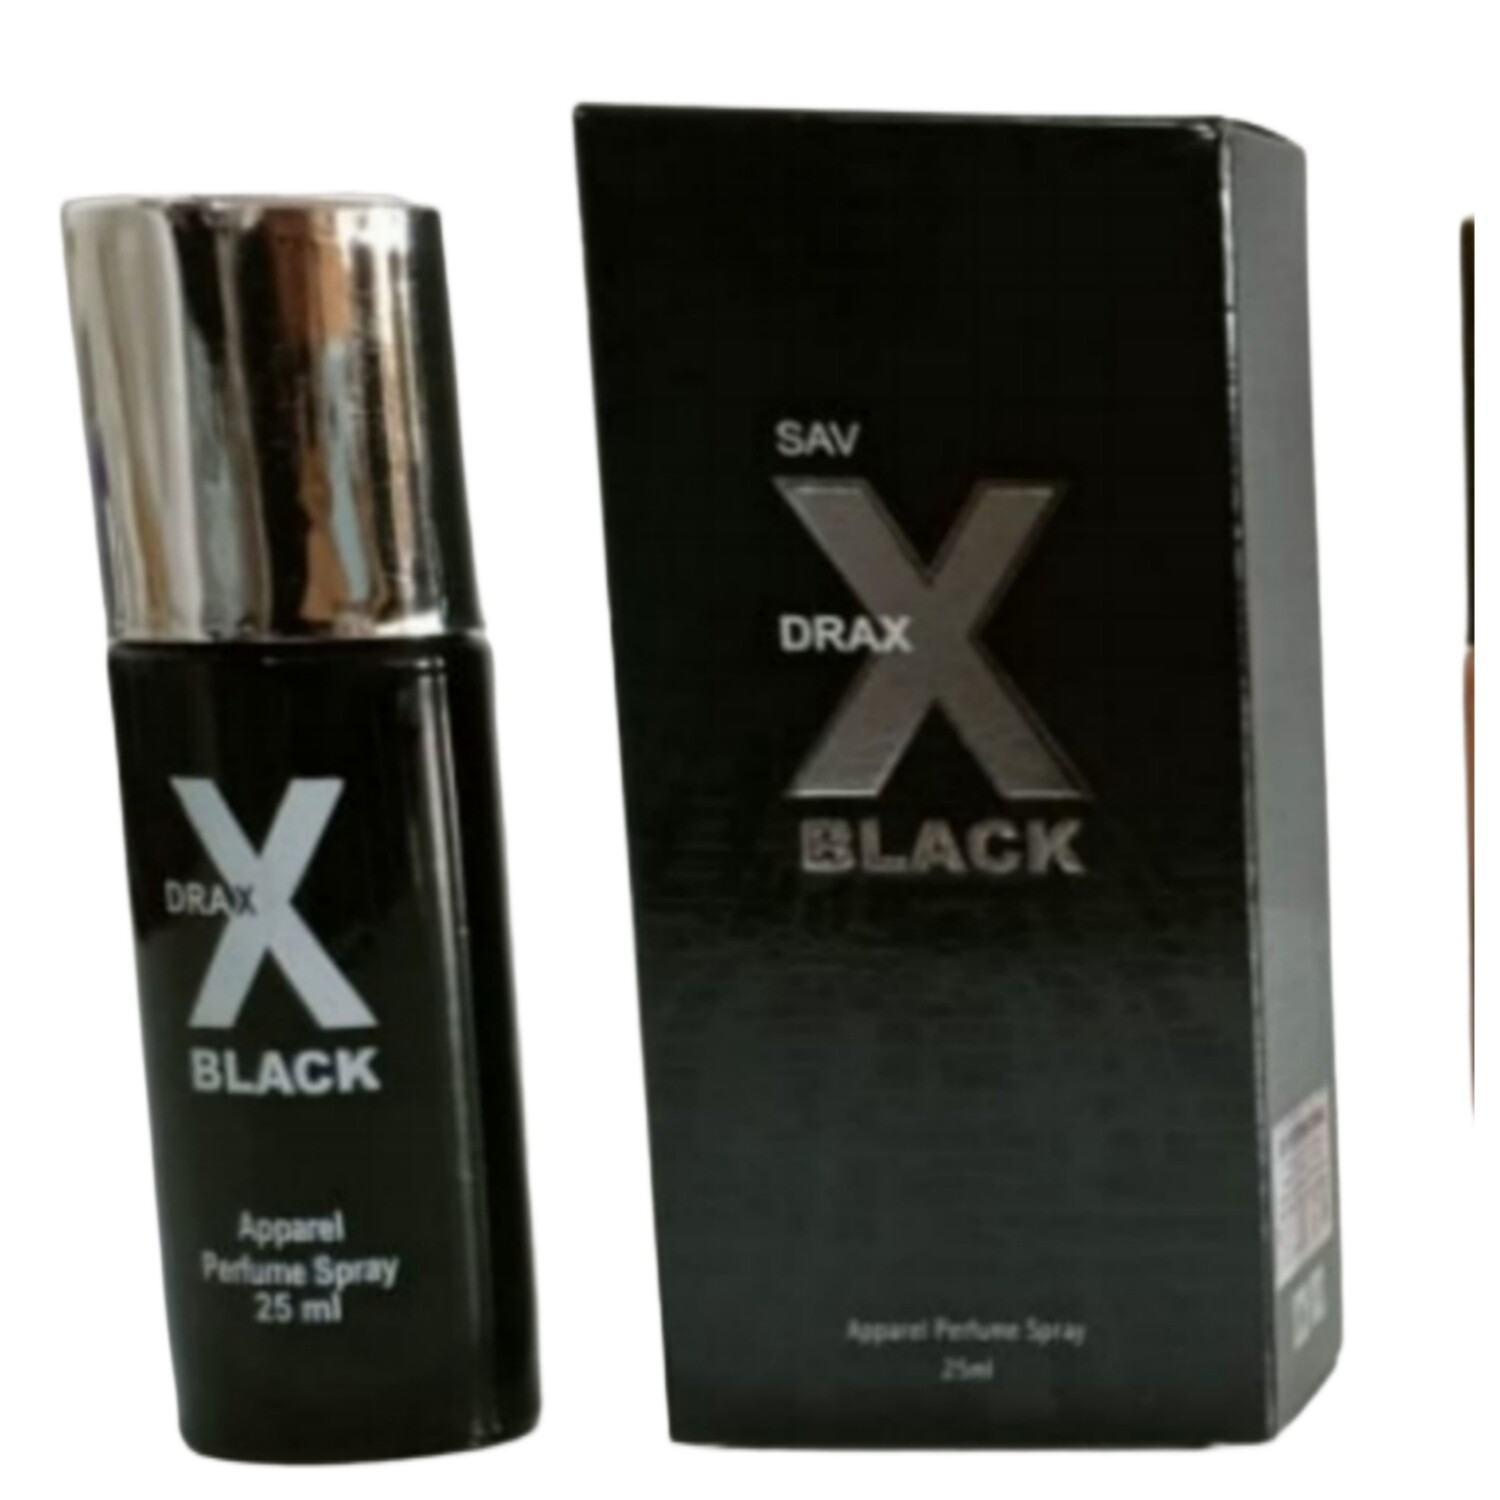 SAV Drax X Black Apparel Perfume Spray 25 ml